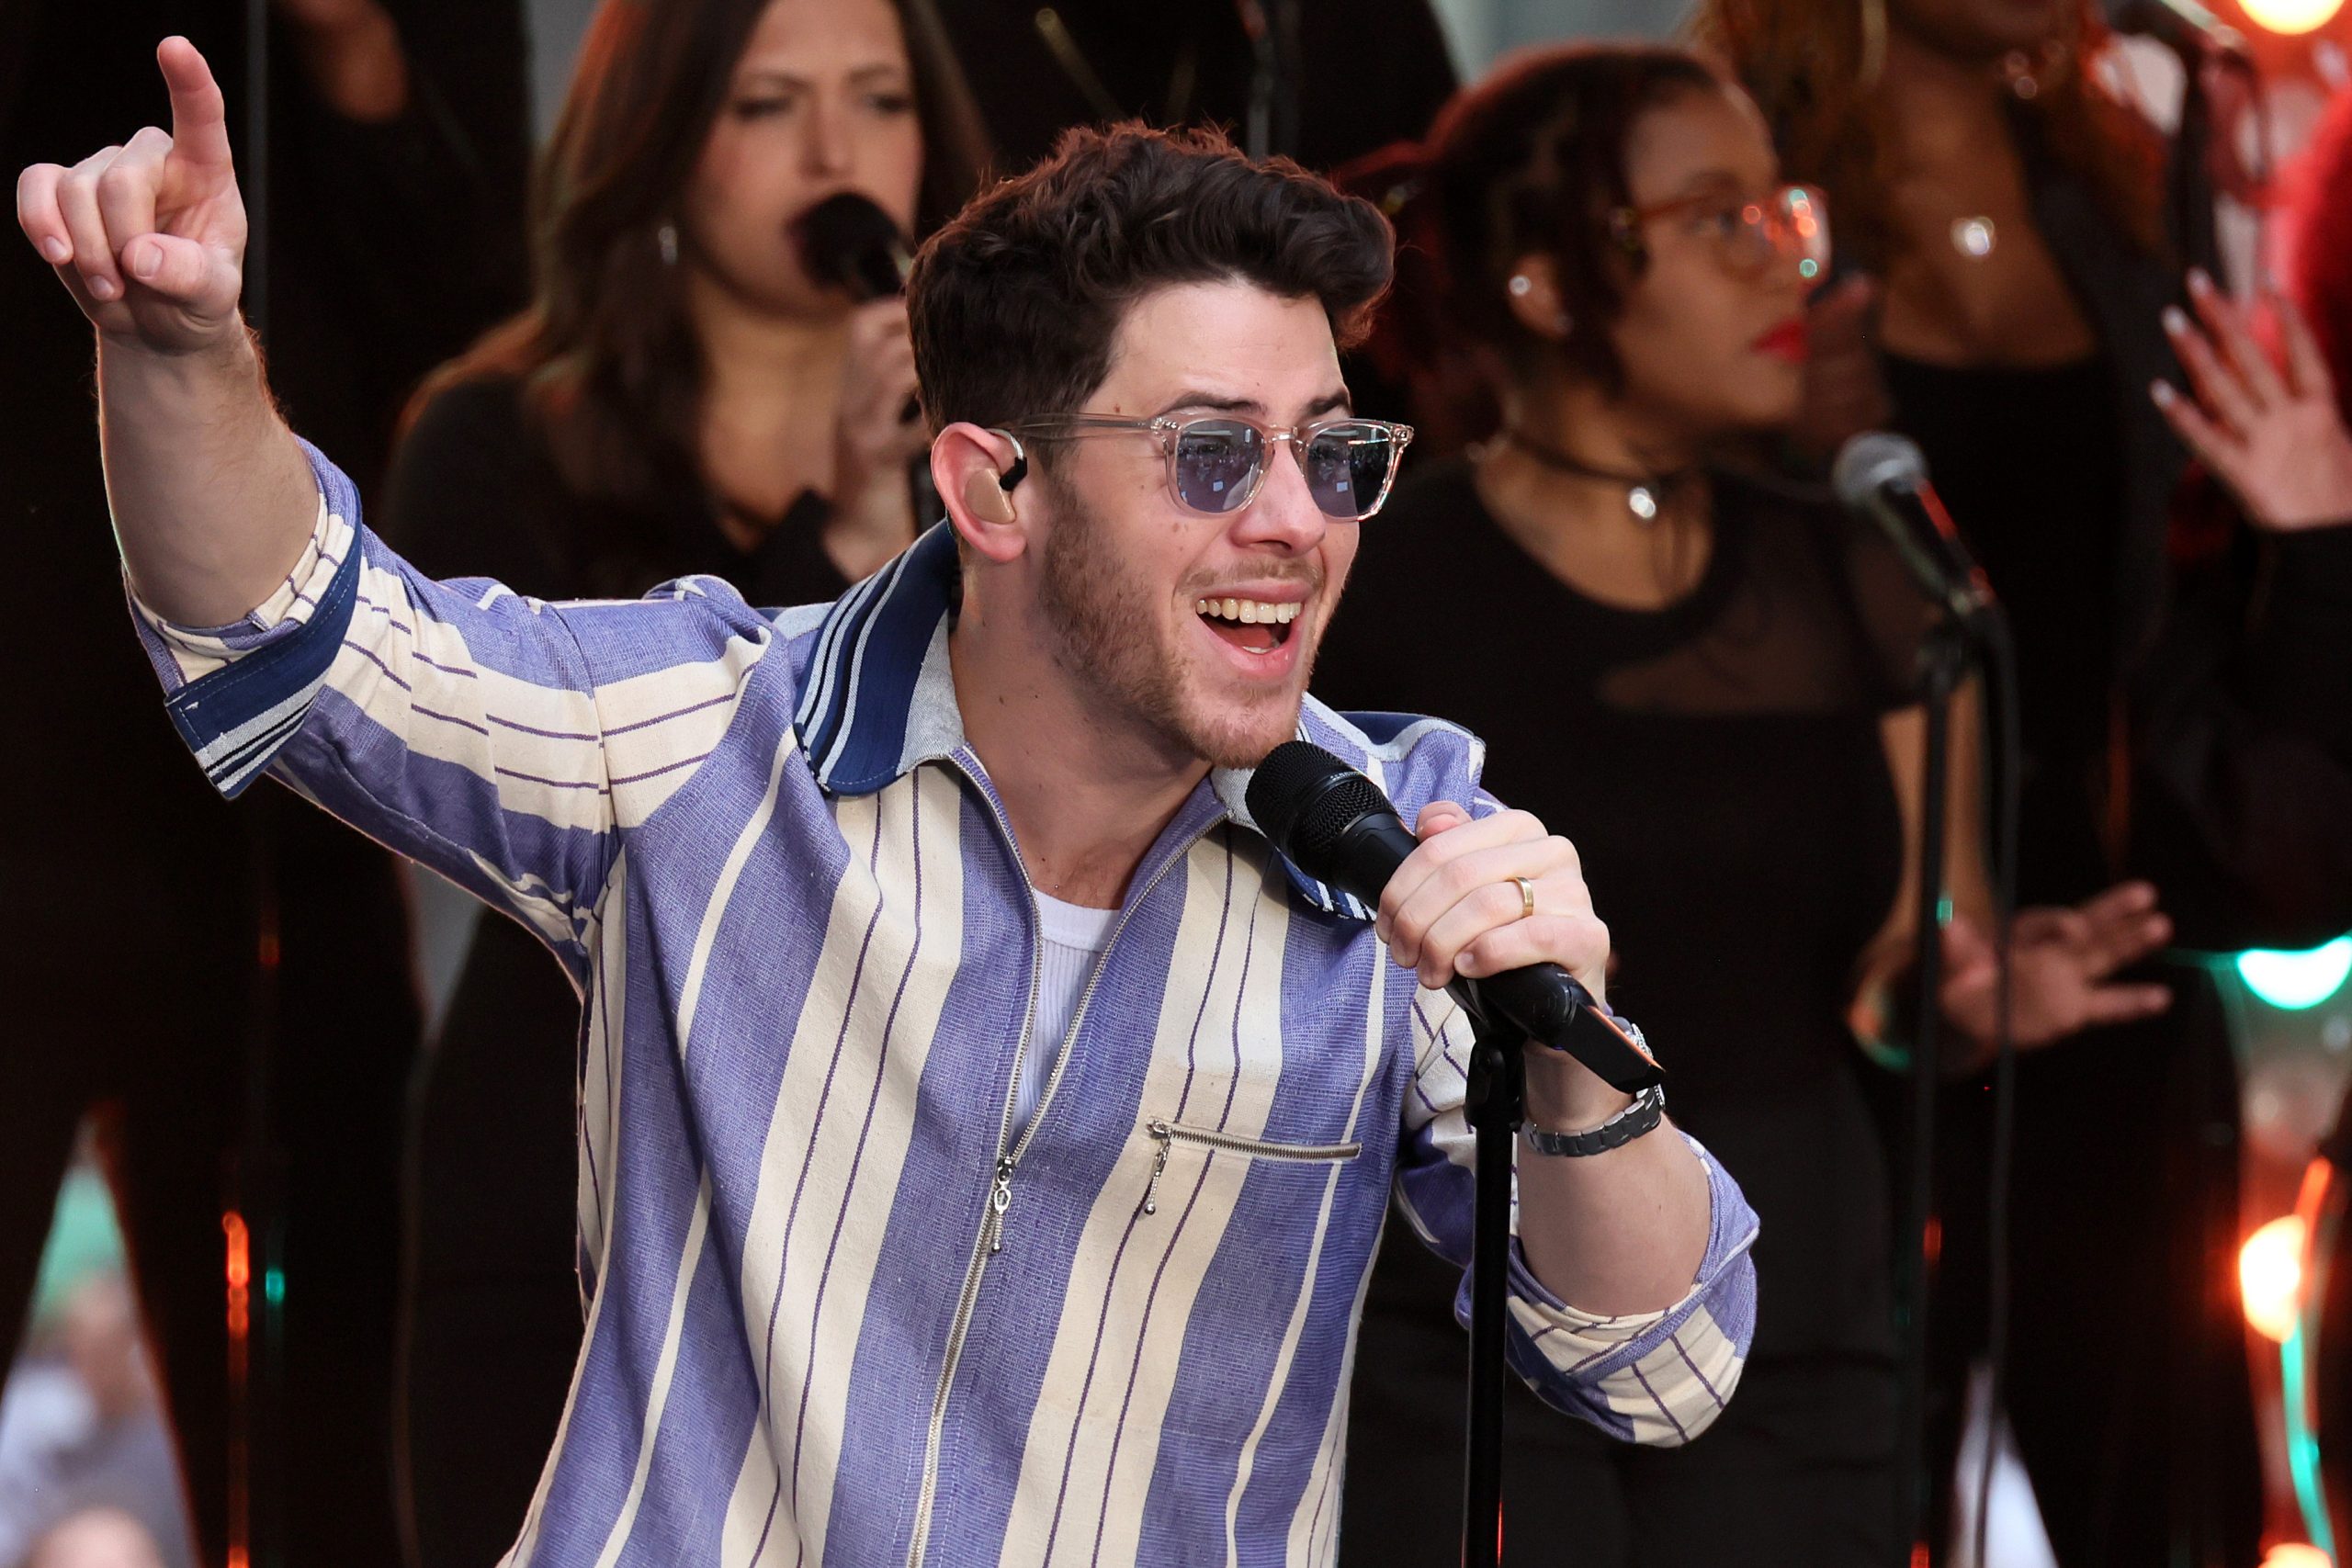 Nick Jonas wears purple sunglasses and a matching striped shirt as he performs